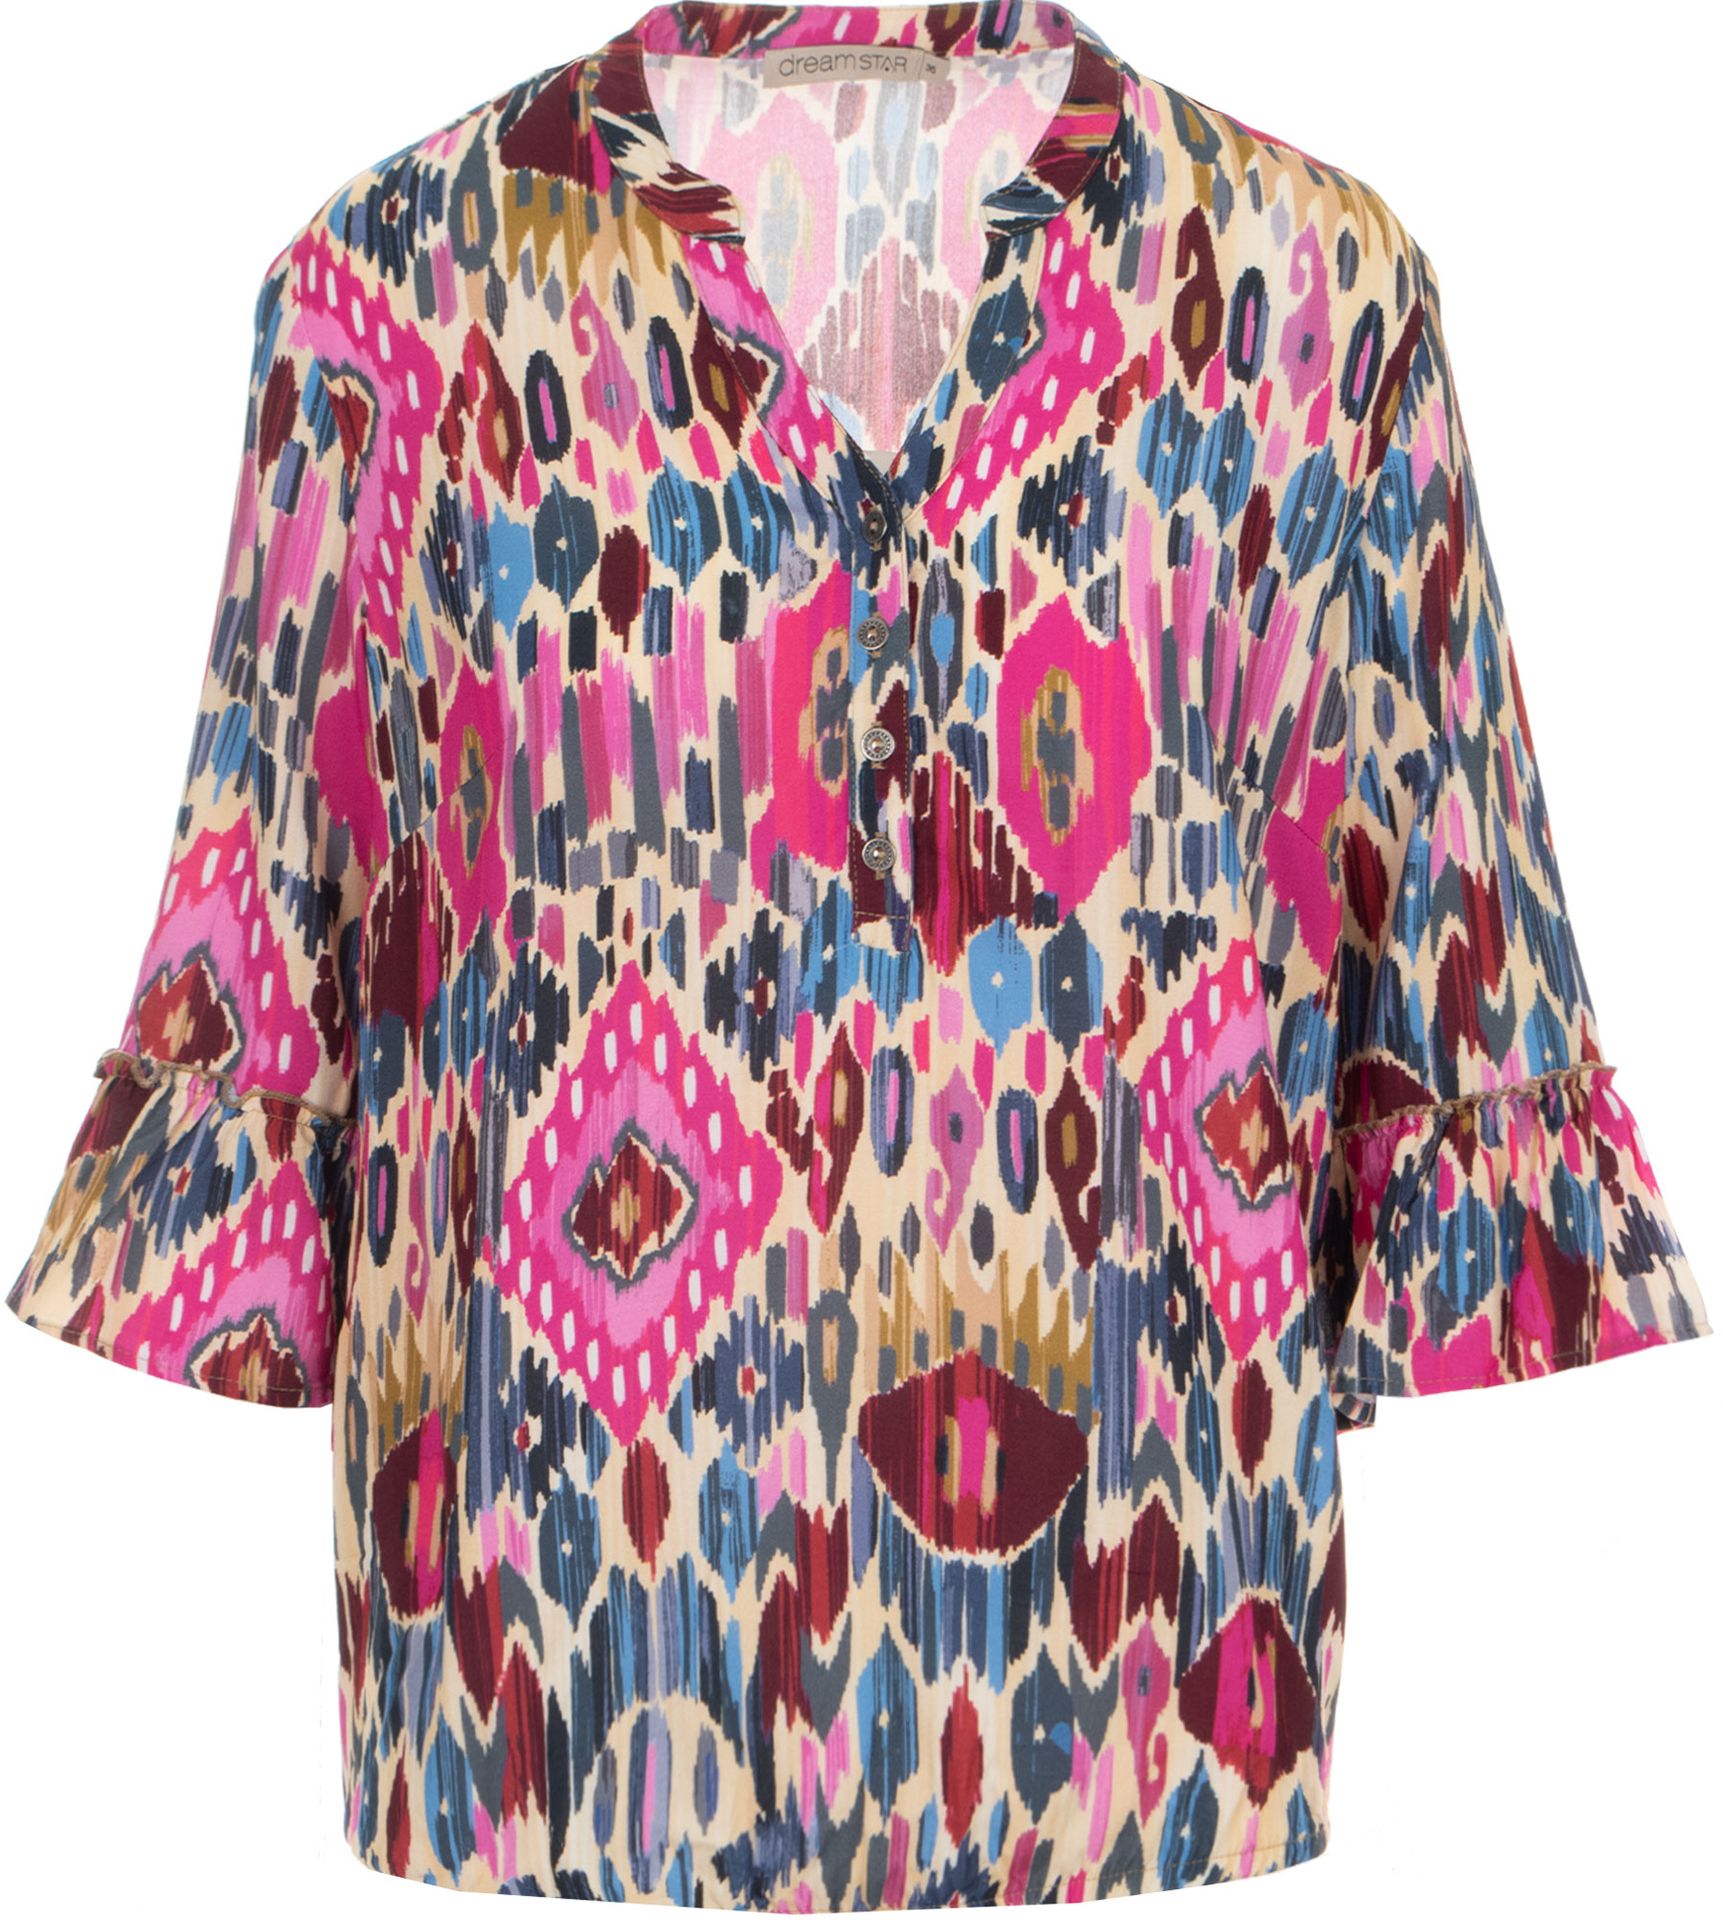 Dreamstar Dreamstar blouse Dante Multi 00075065-9600